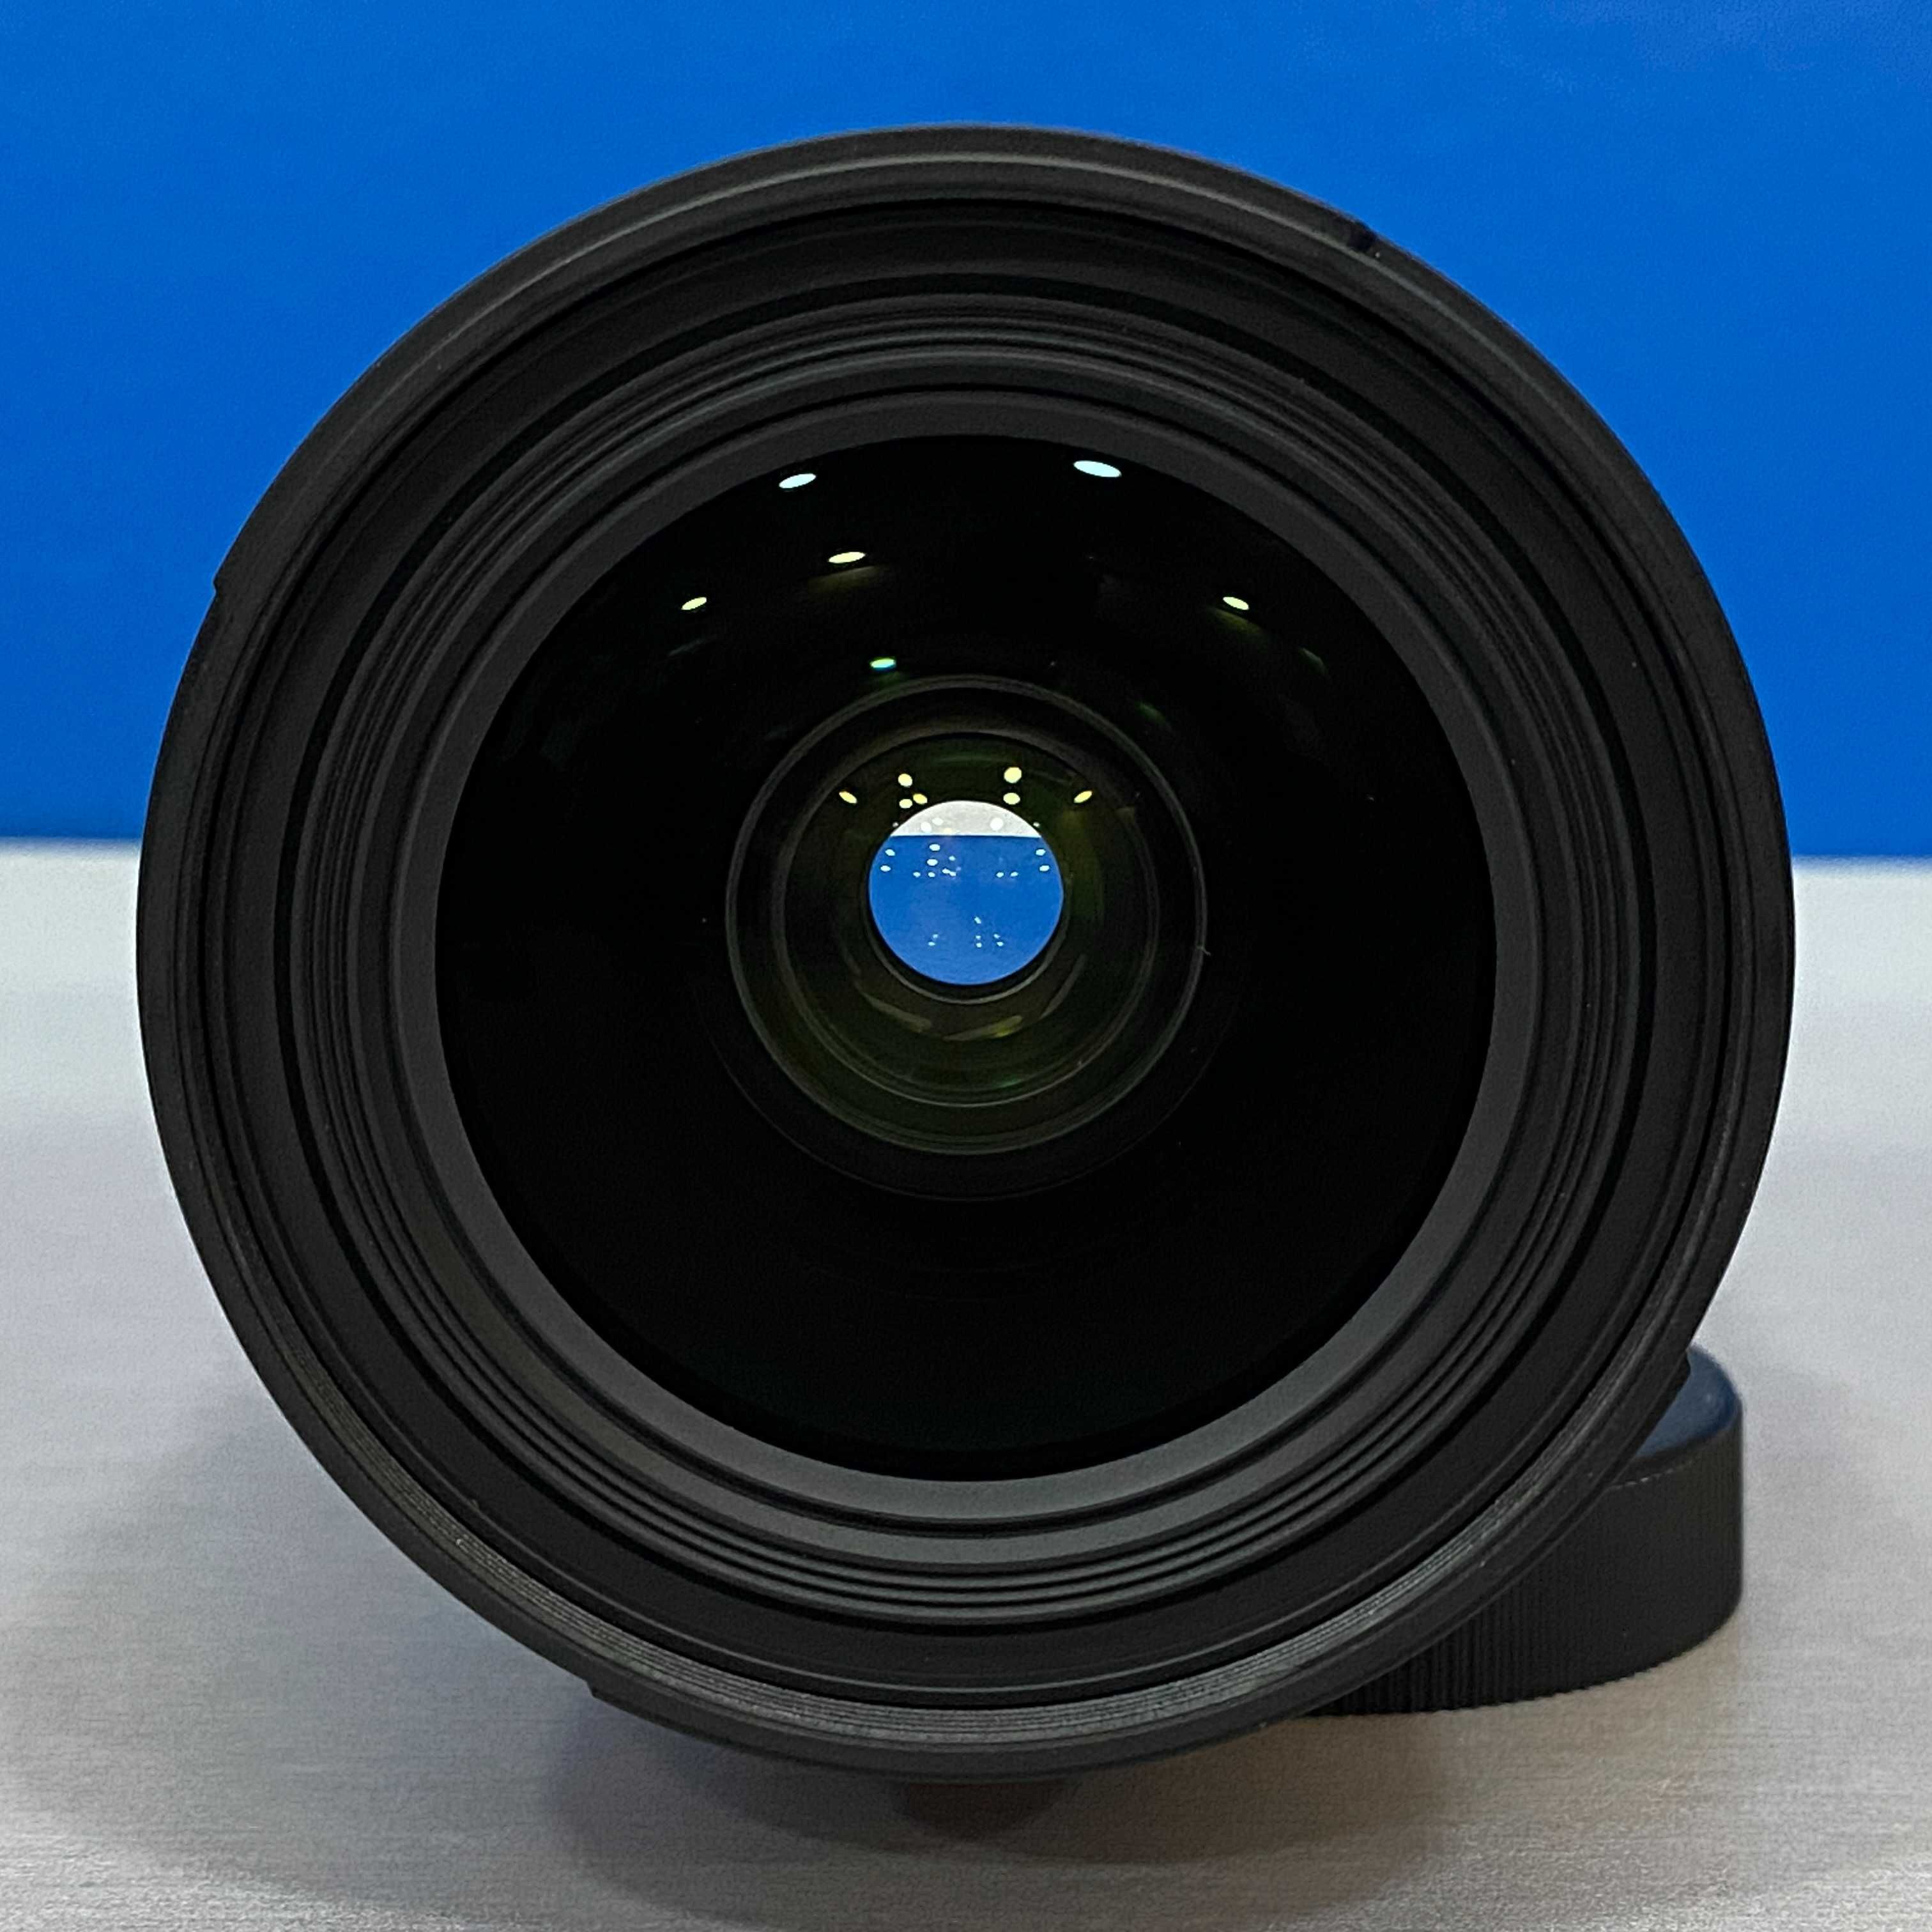 Sigma ART 18-35mm f/1.8 DC HSM (Canon)